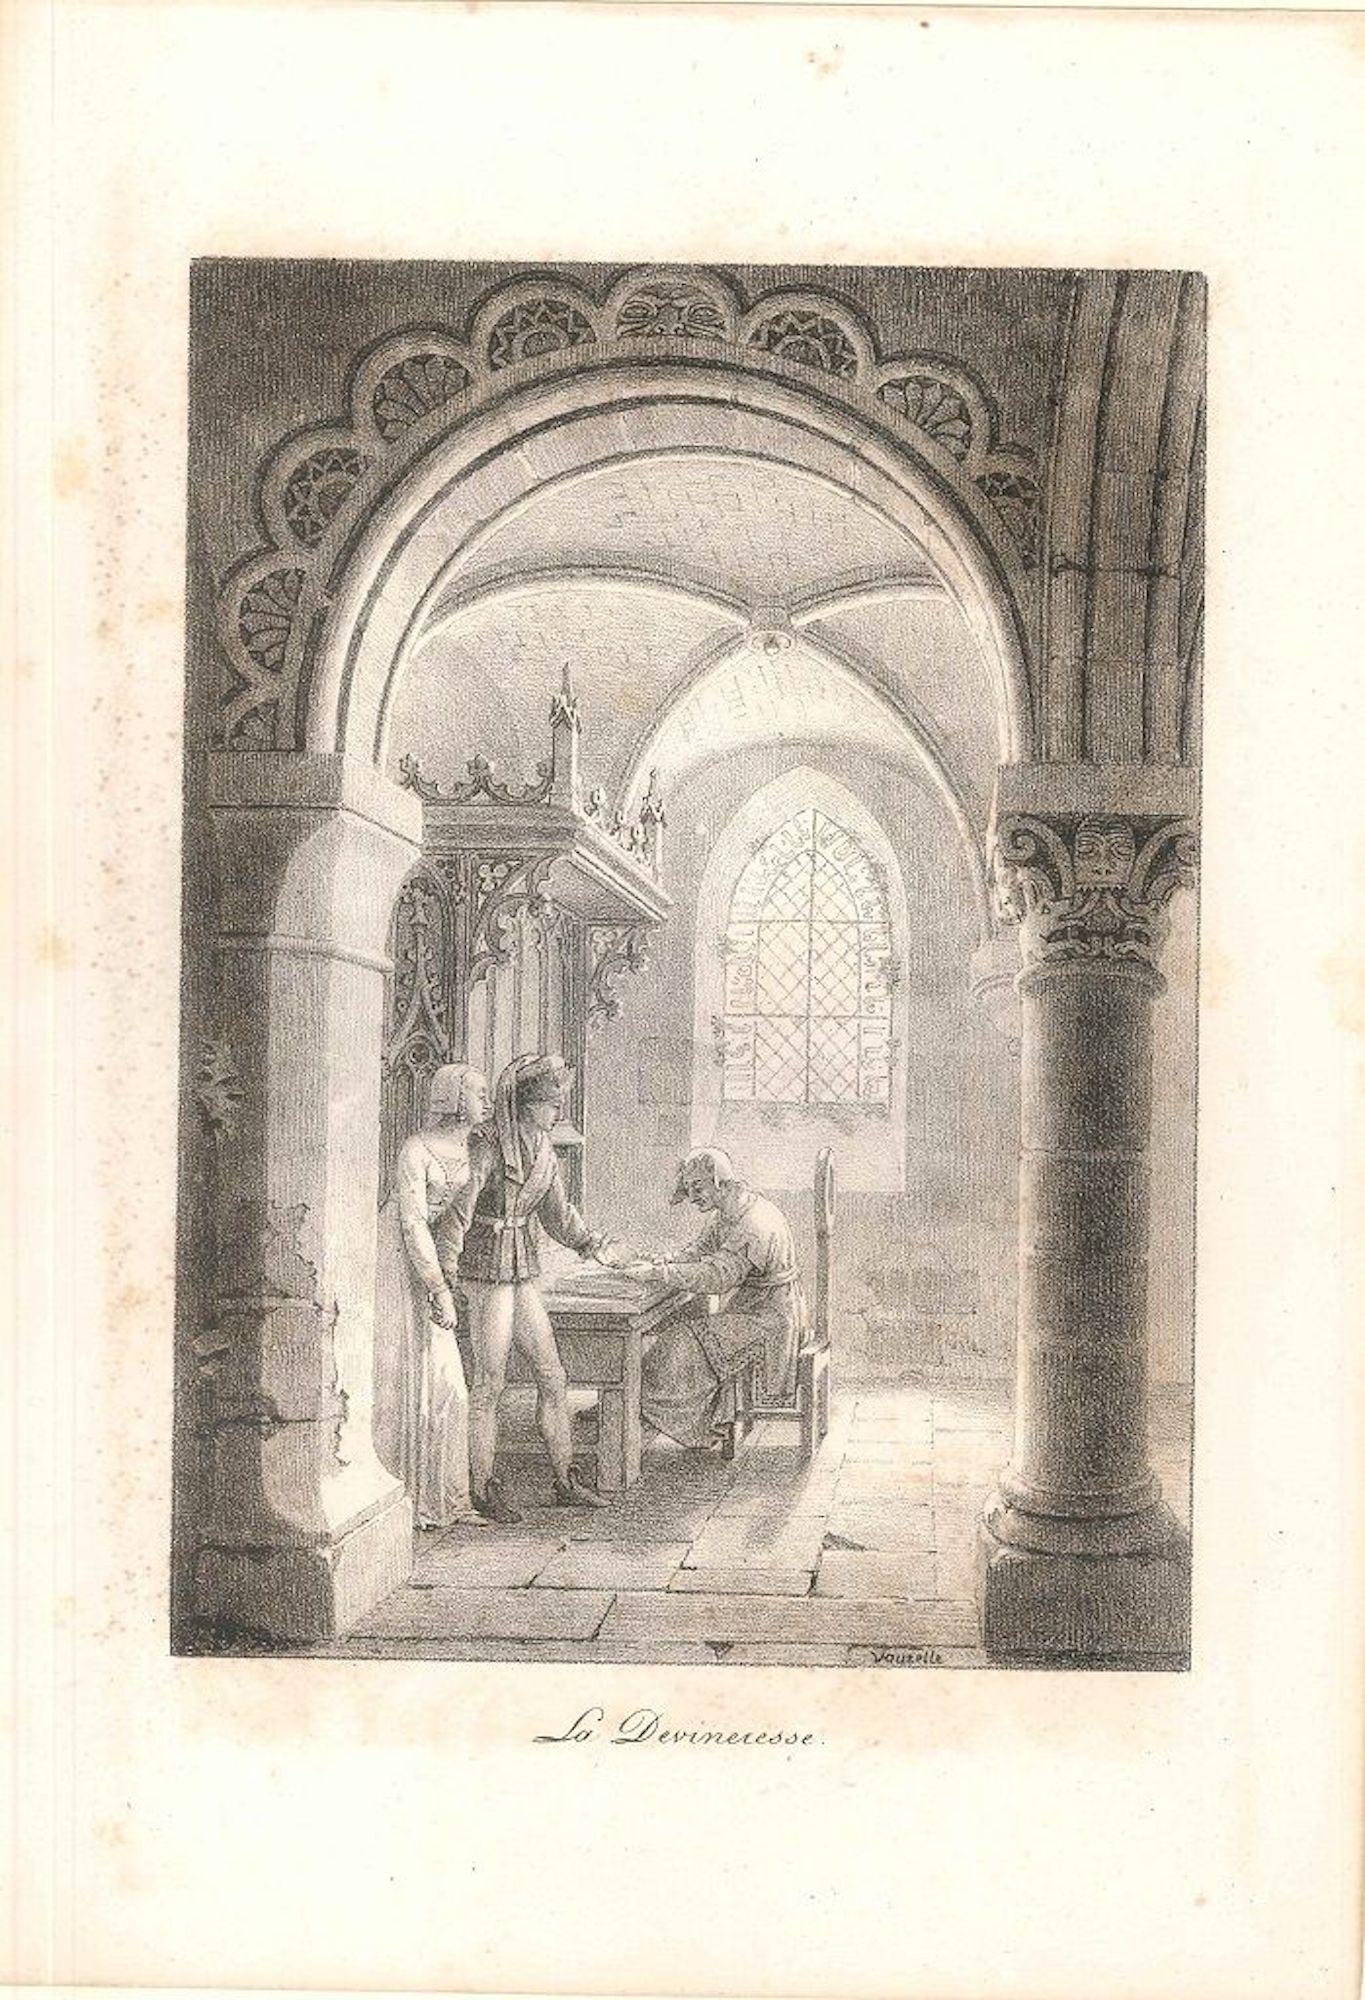 Jean-Lubin Vauzelle Interior Print - La Devineresse - Original Etching by J-L Vauzelle - End of 18th Century